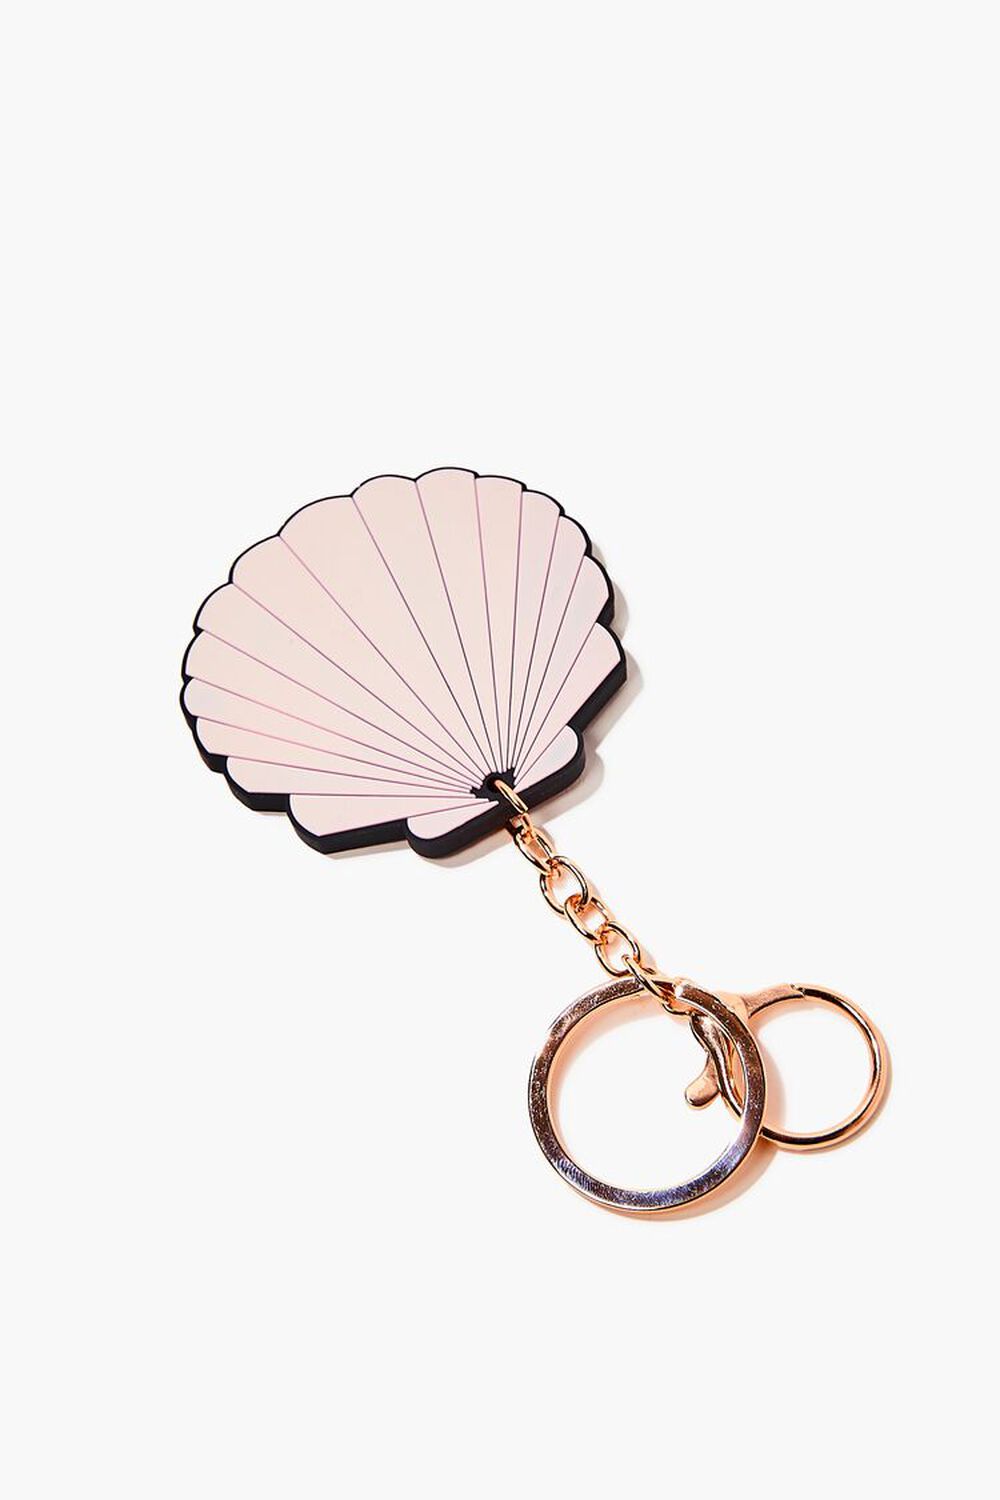 PINK/MULTI Seashell Pendant Keychain, image 1